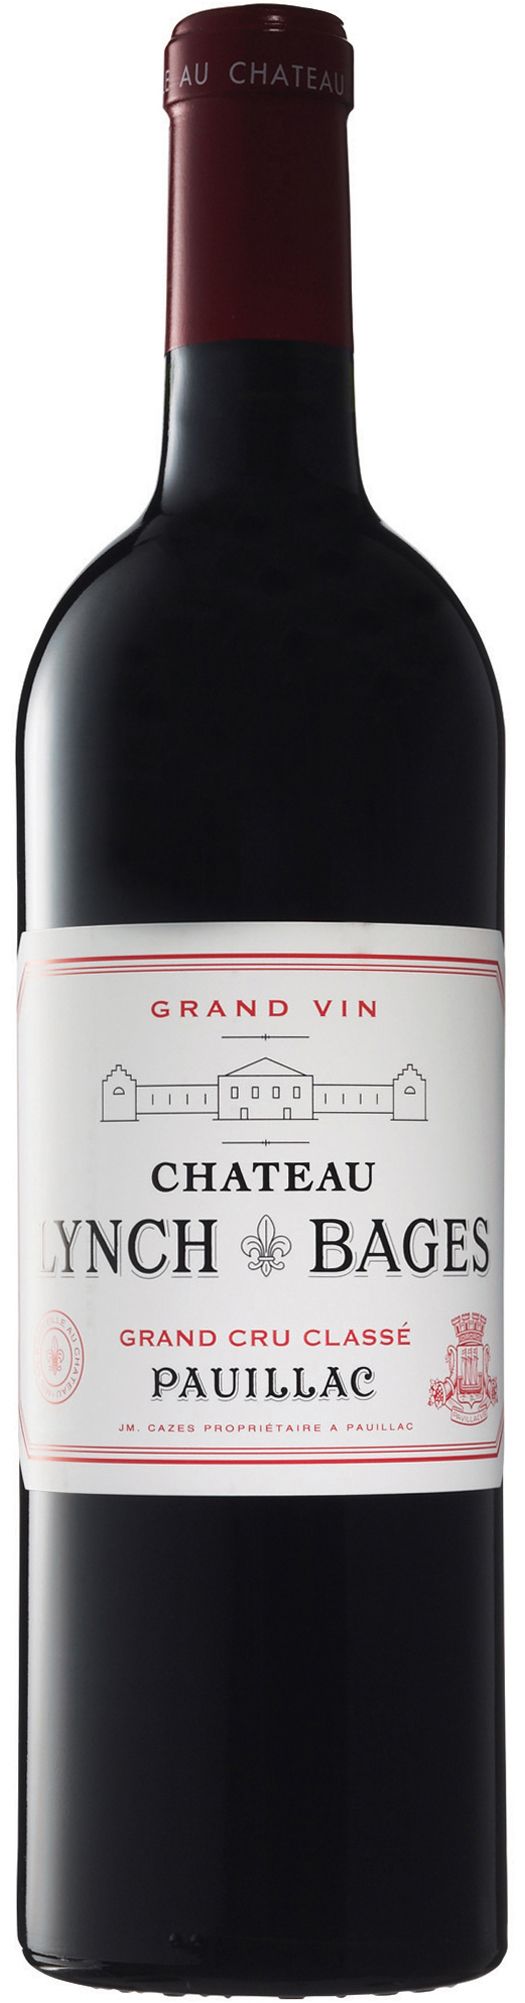 Chateau Lynch-Bages, Grand Cru Classe, 2001